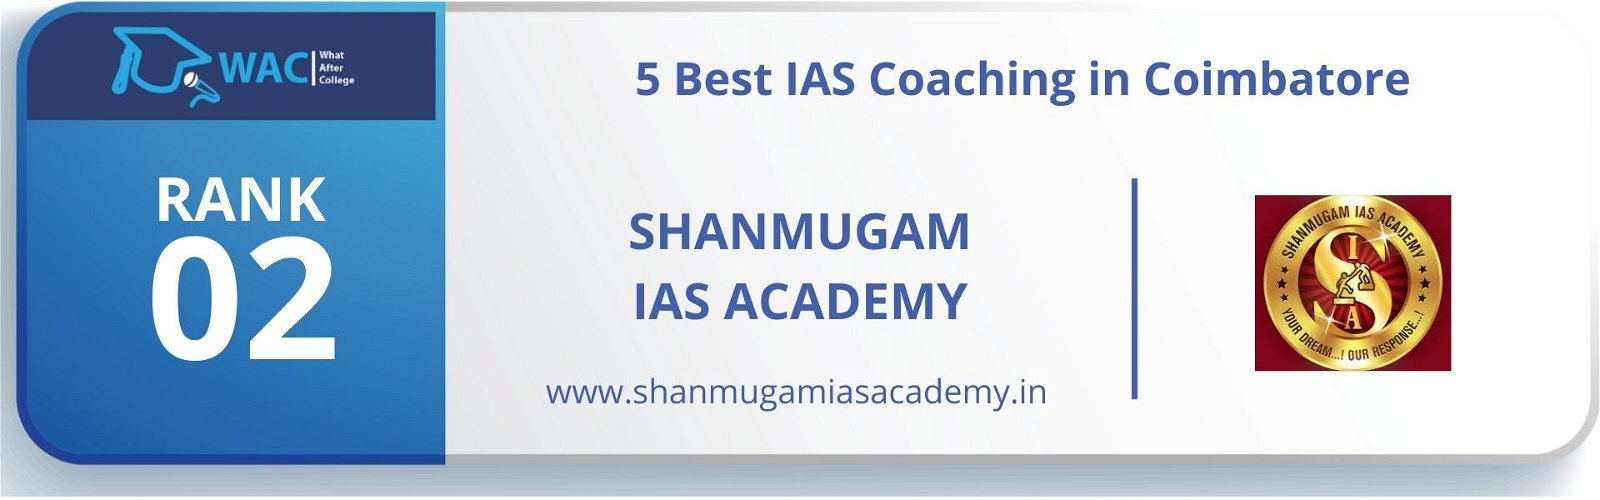 5 Best IAS Coaching in Coimbatore Rank 2: Shanmugam IAS Academy